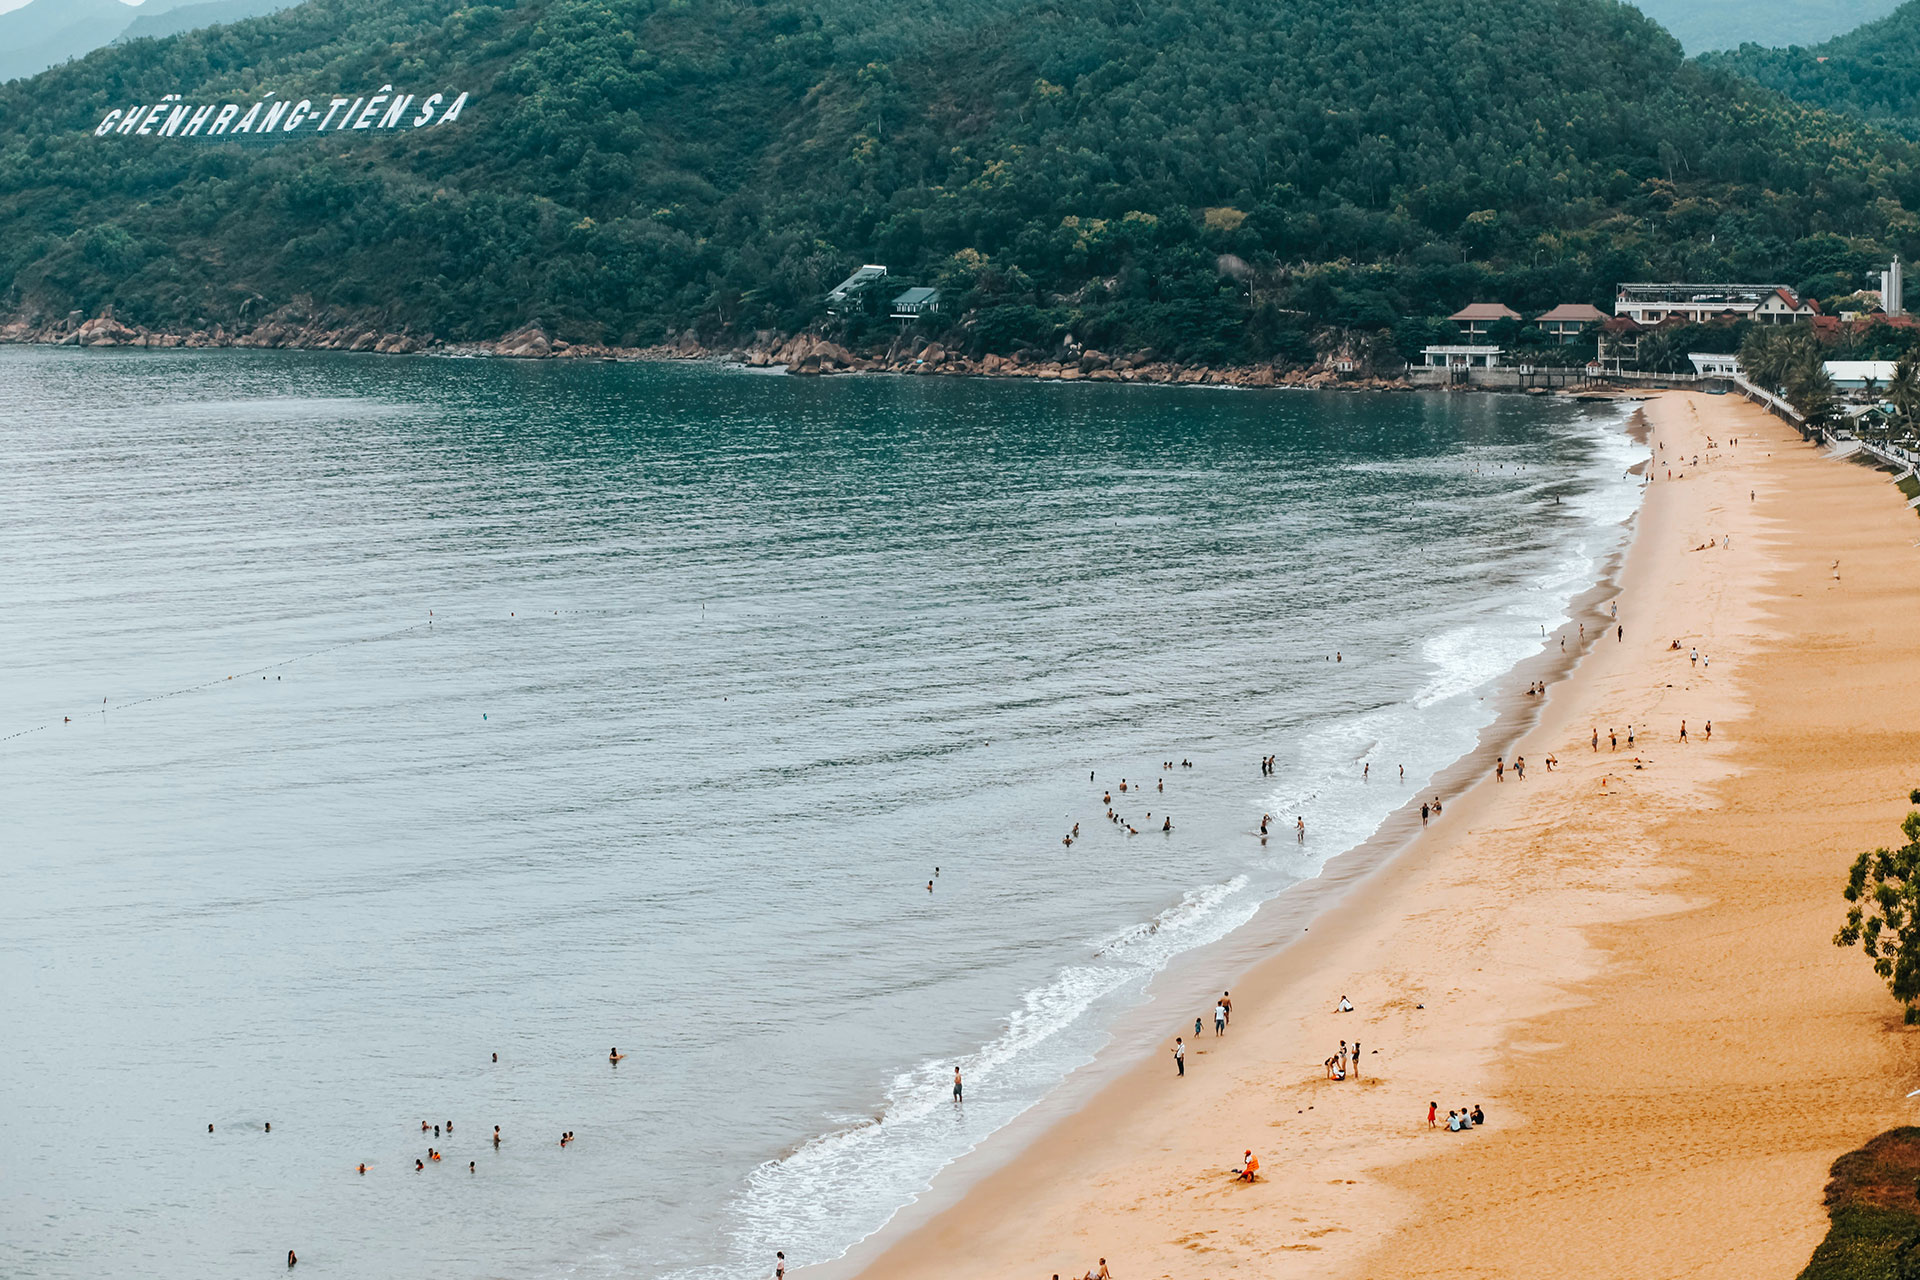 Tien Sa Beach, Photo by The Pham on Pexels